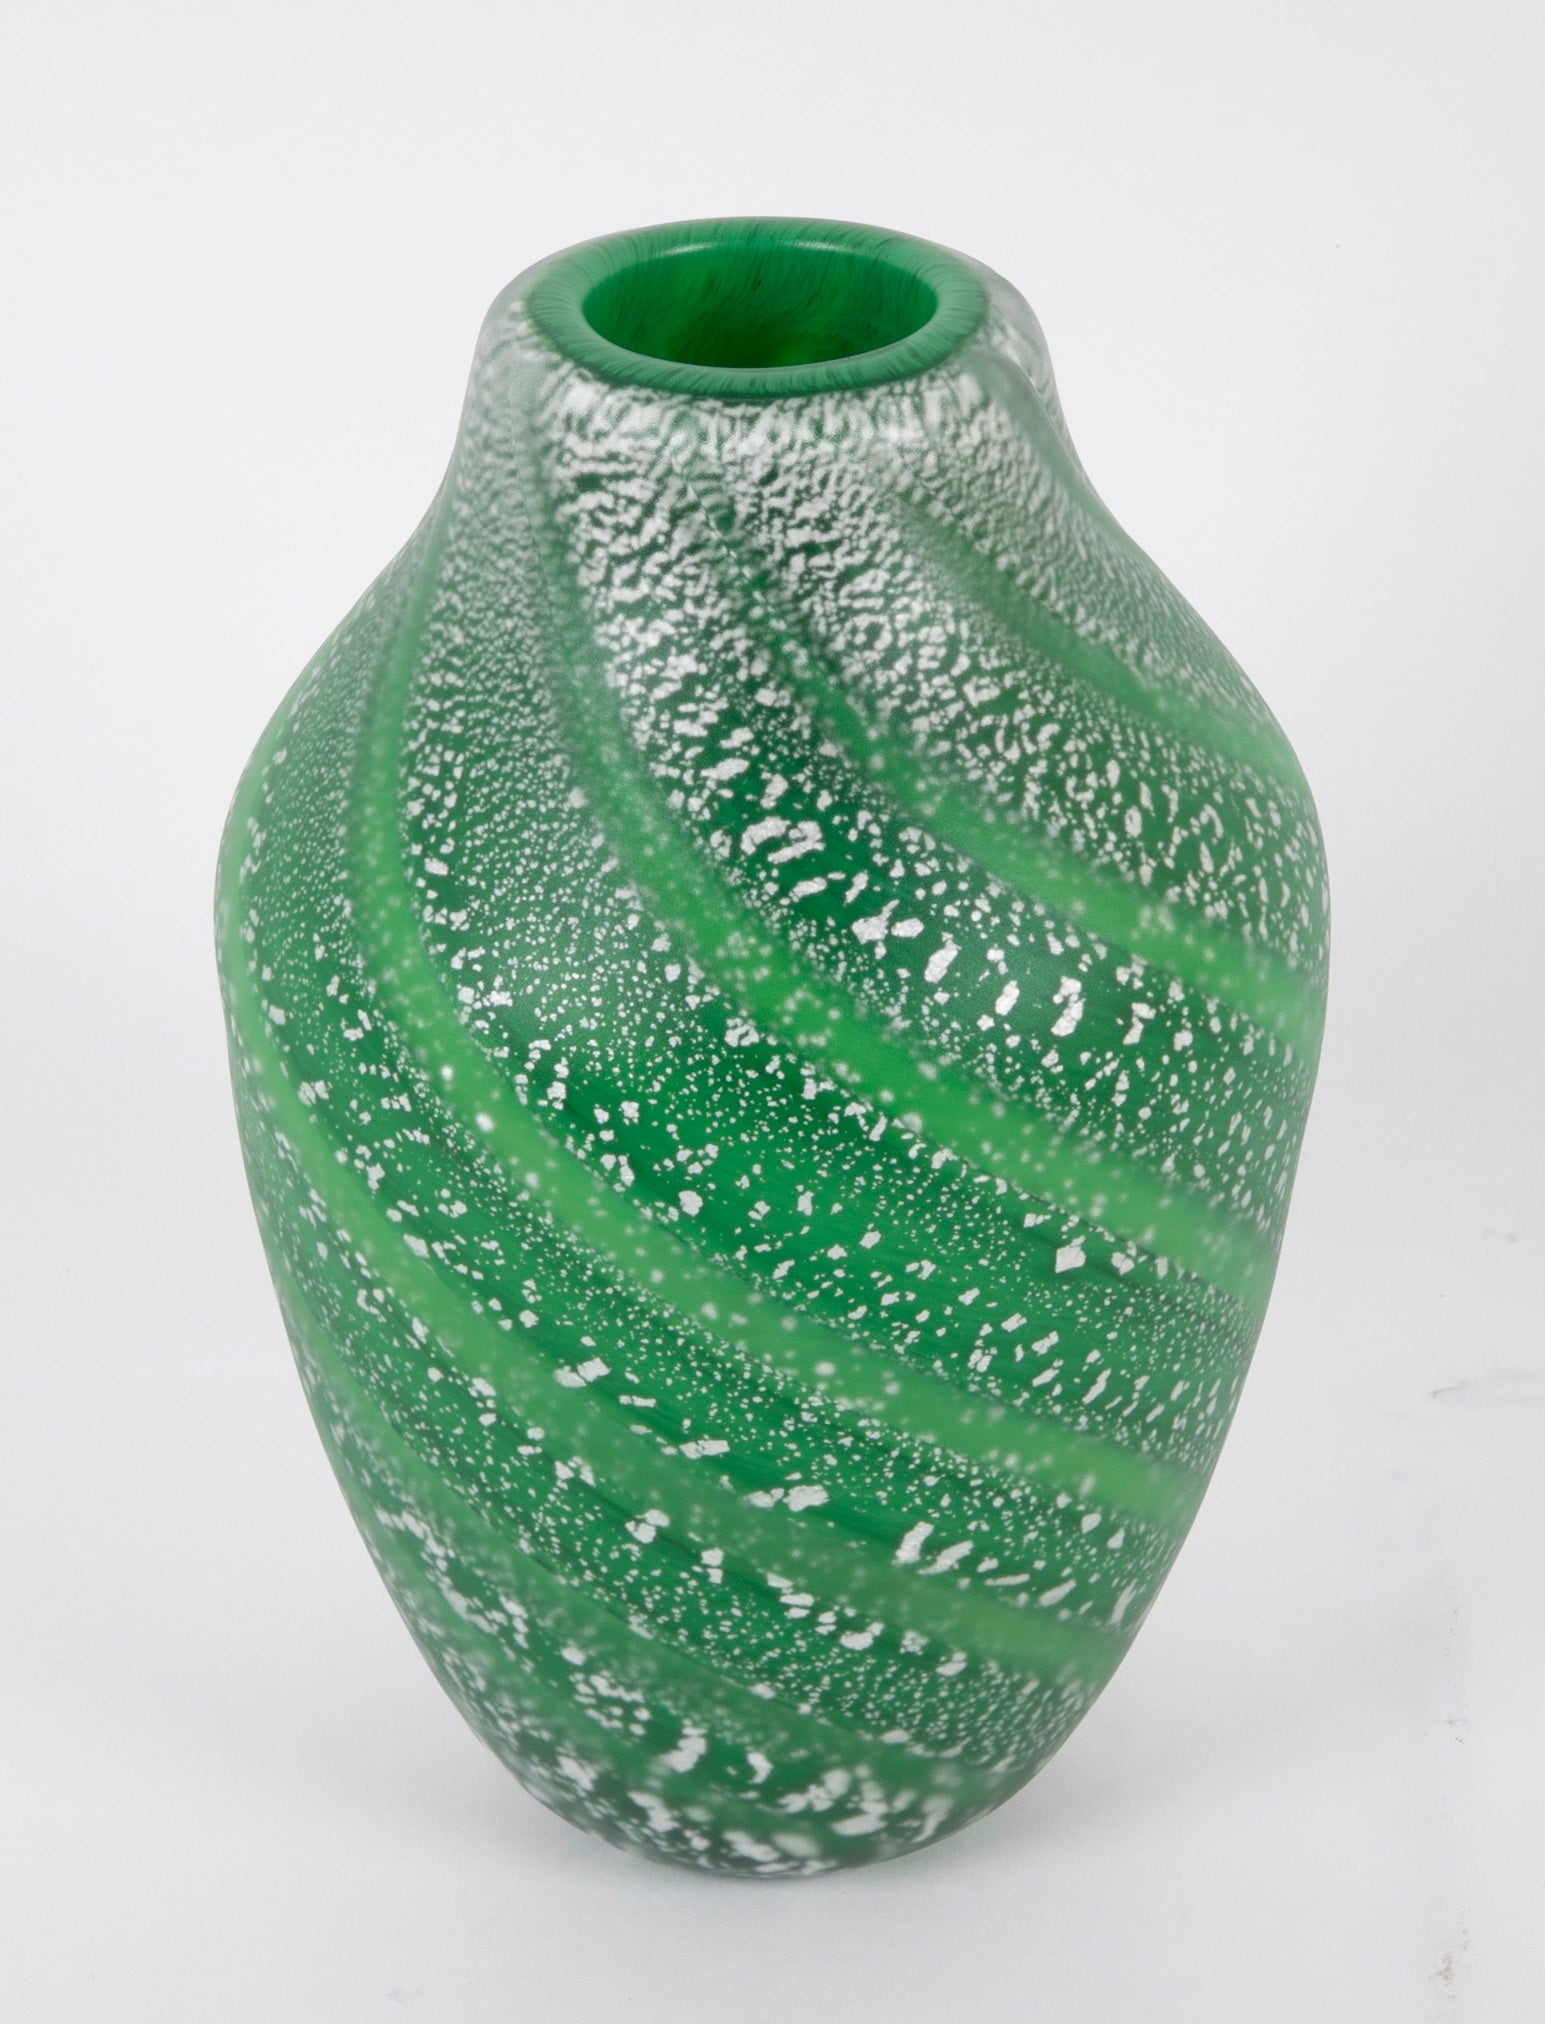 Green Art Glass Vase by Japanese Master Glass Artist Hisatoshi Iwata